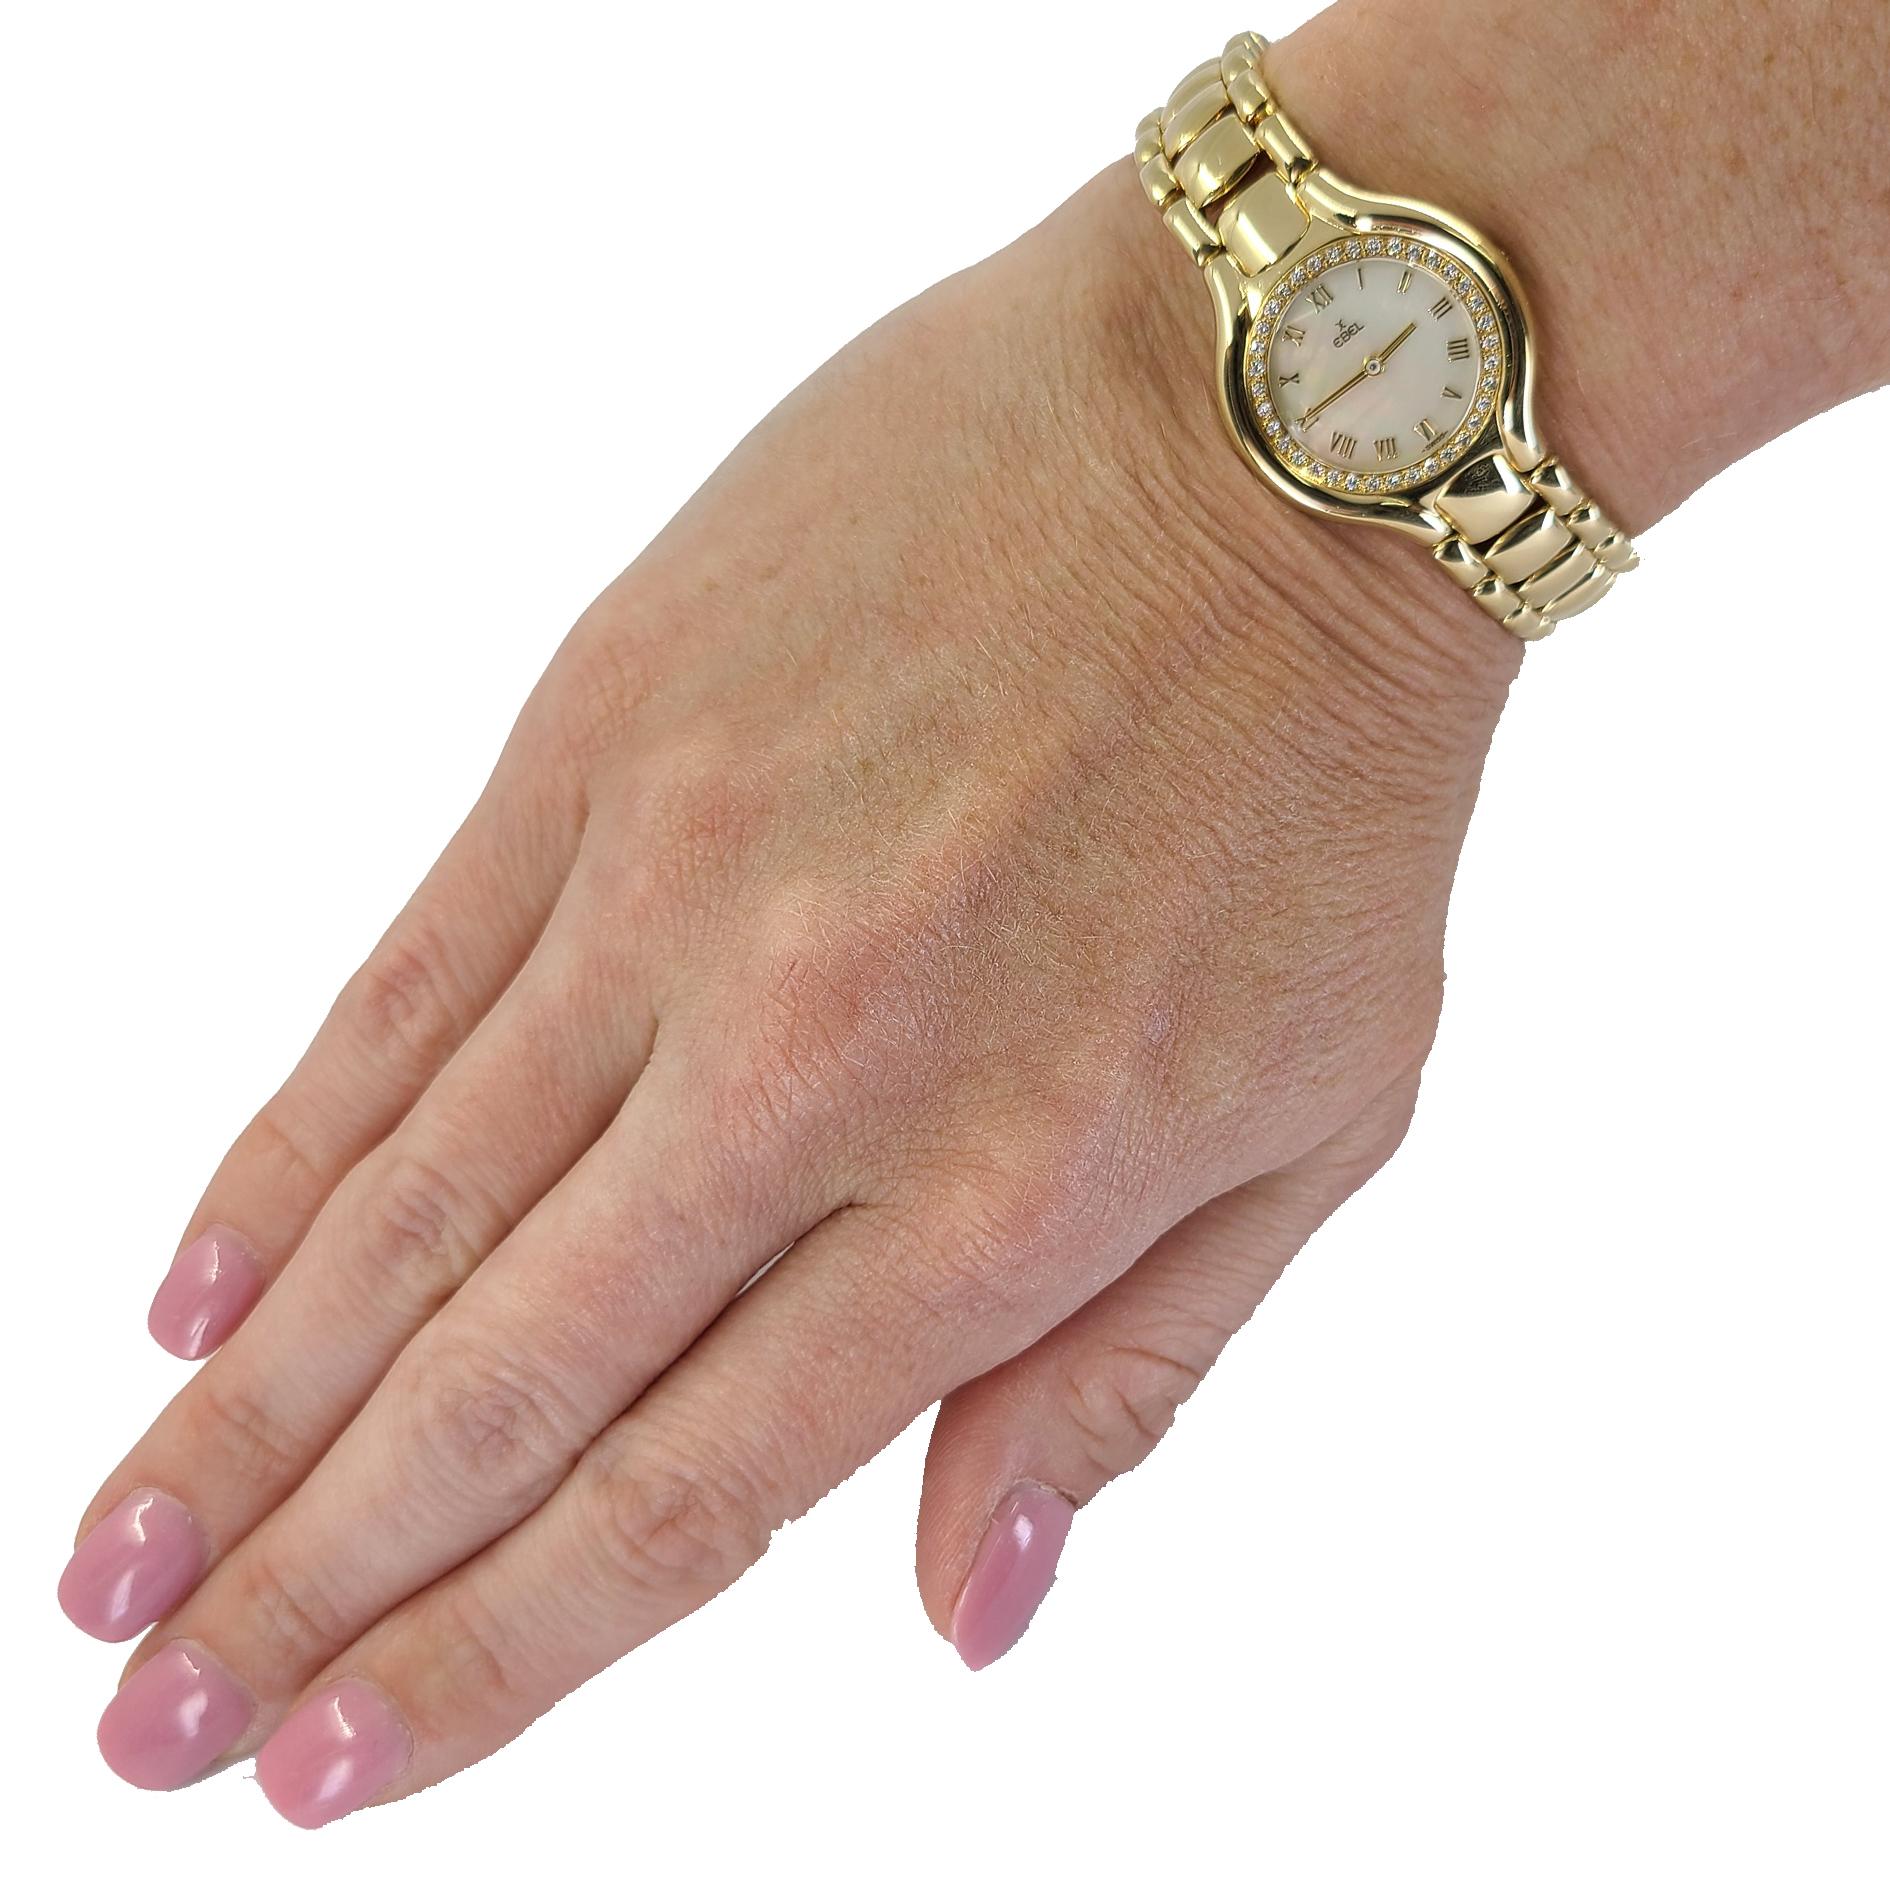 Pre-Owned 18 Karat Yellow Gold Ebel Beluga Wristwatch With Roman Mother of Pearl Dial, Diamond Bezel, & Hidden Folding Clasp. Quartz Movement. Caseback Numbers 42103262/866940. Includes 1 year timekeeping warranty.